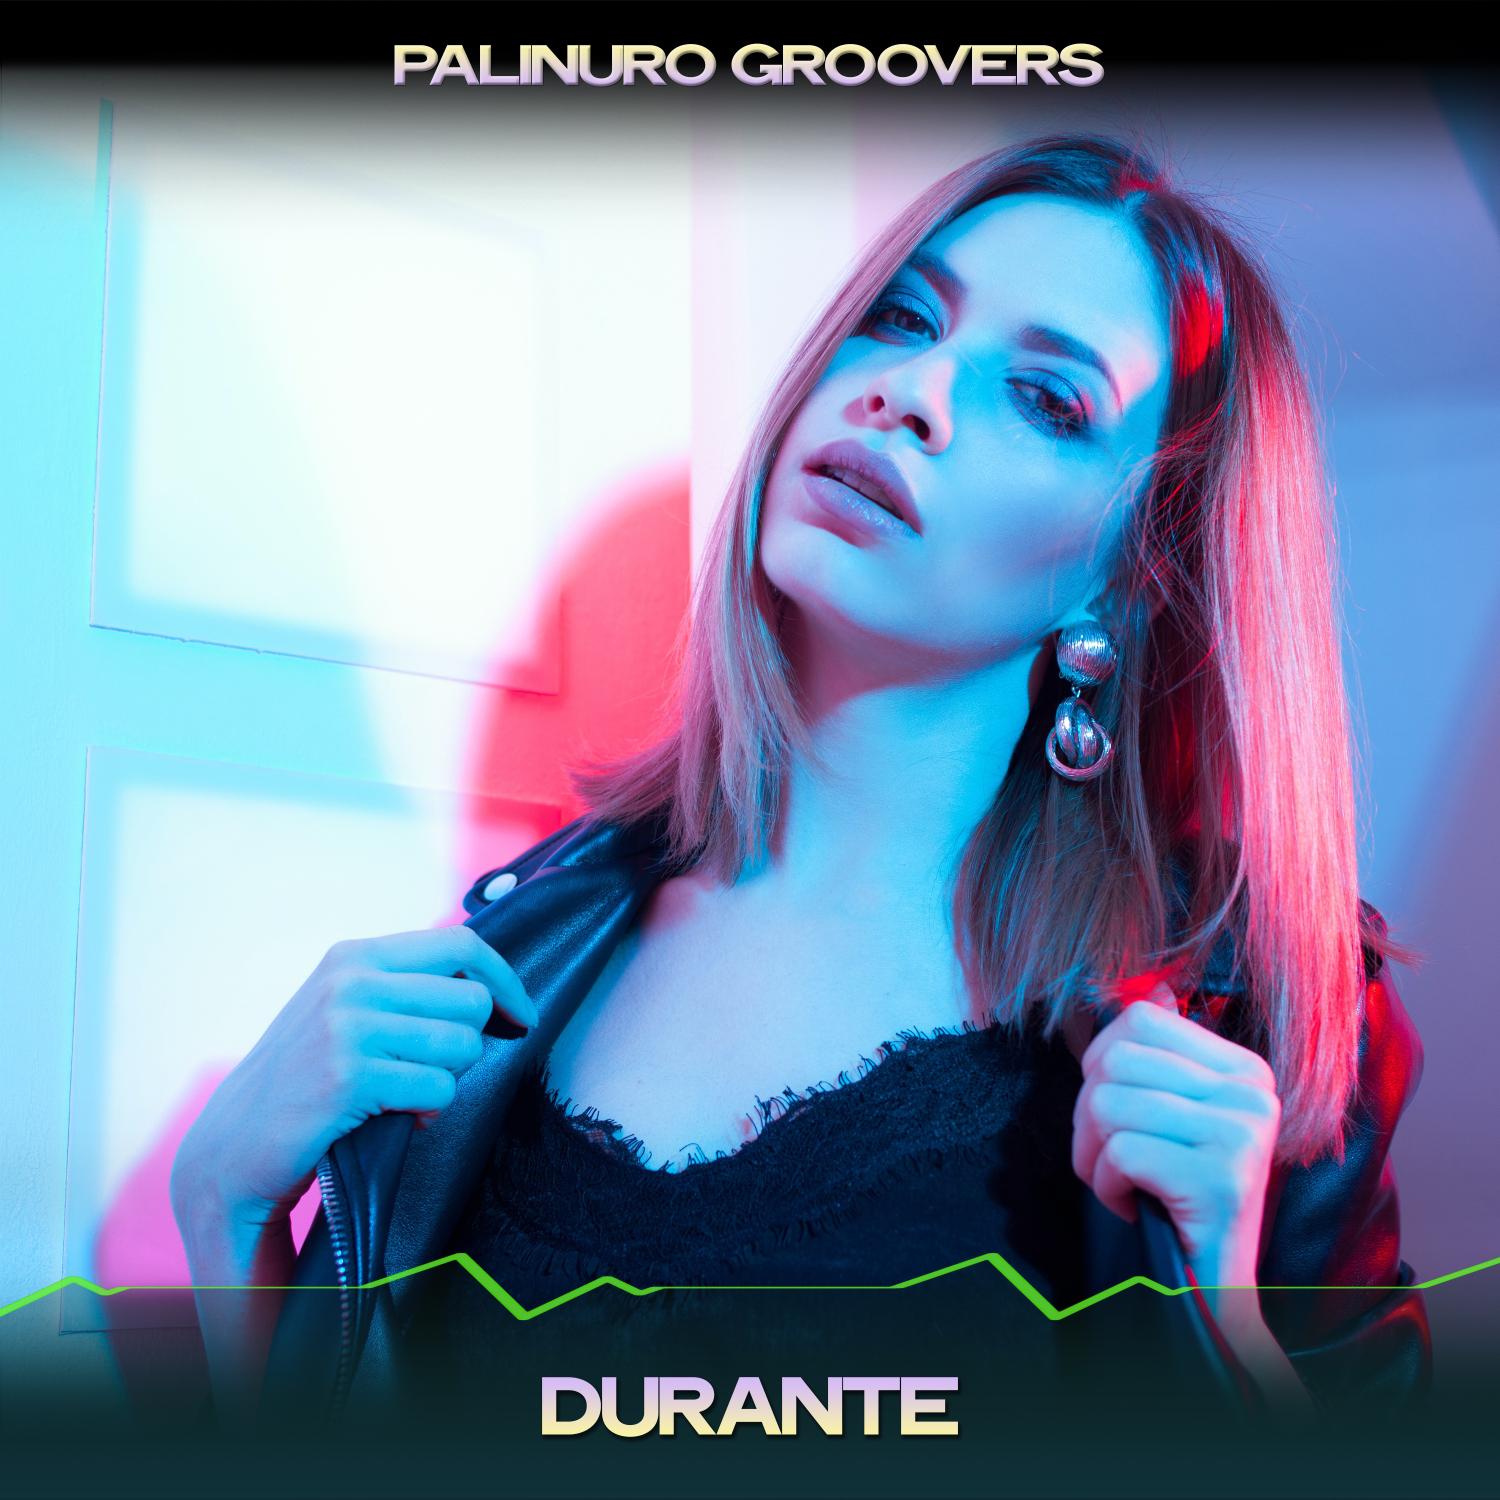 Palinuro Groovers - Durante (24 bit remastered)